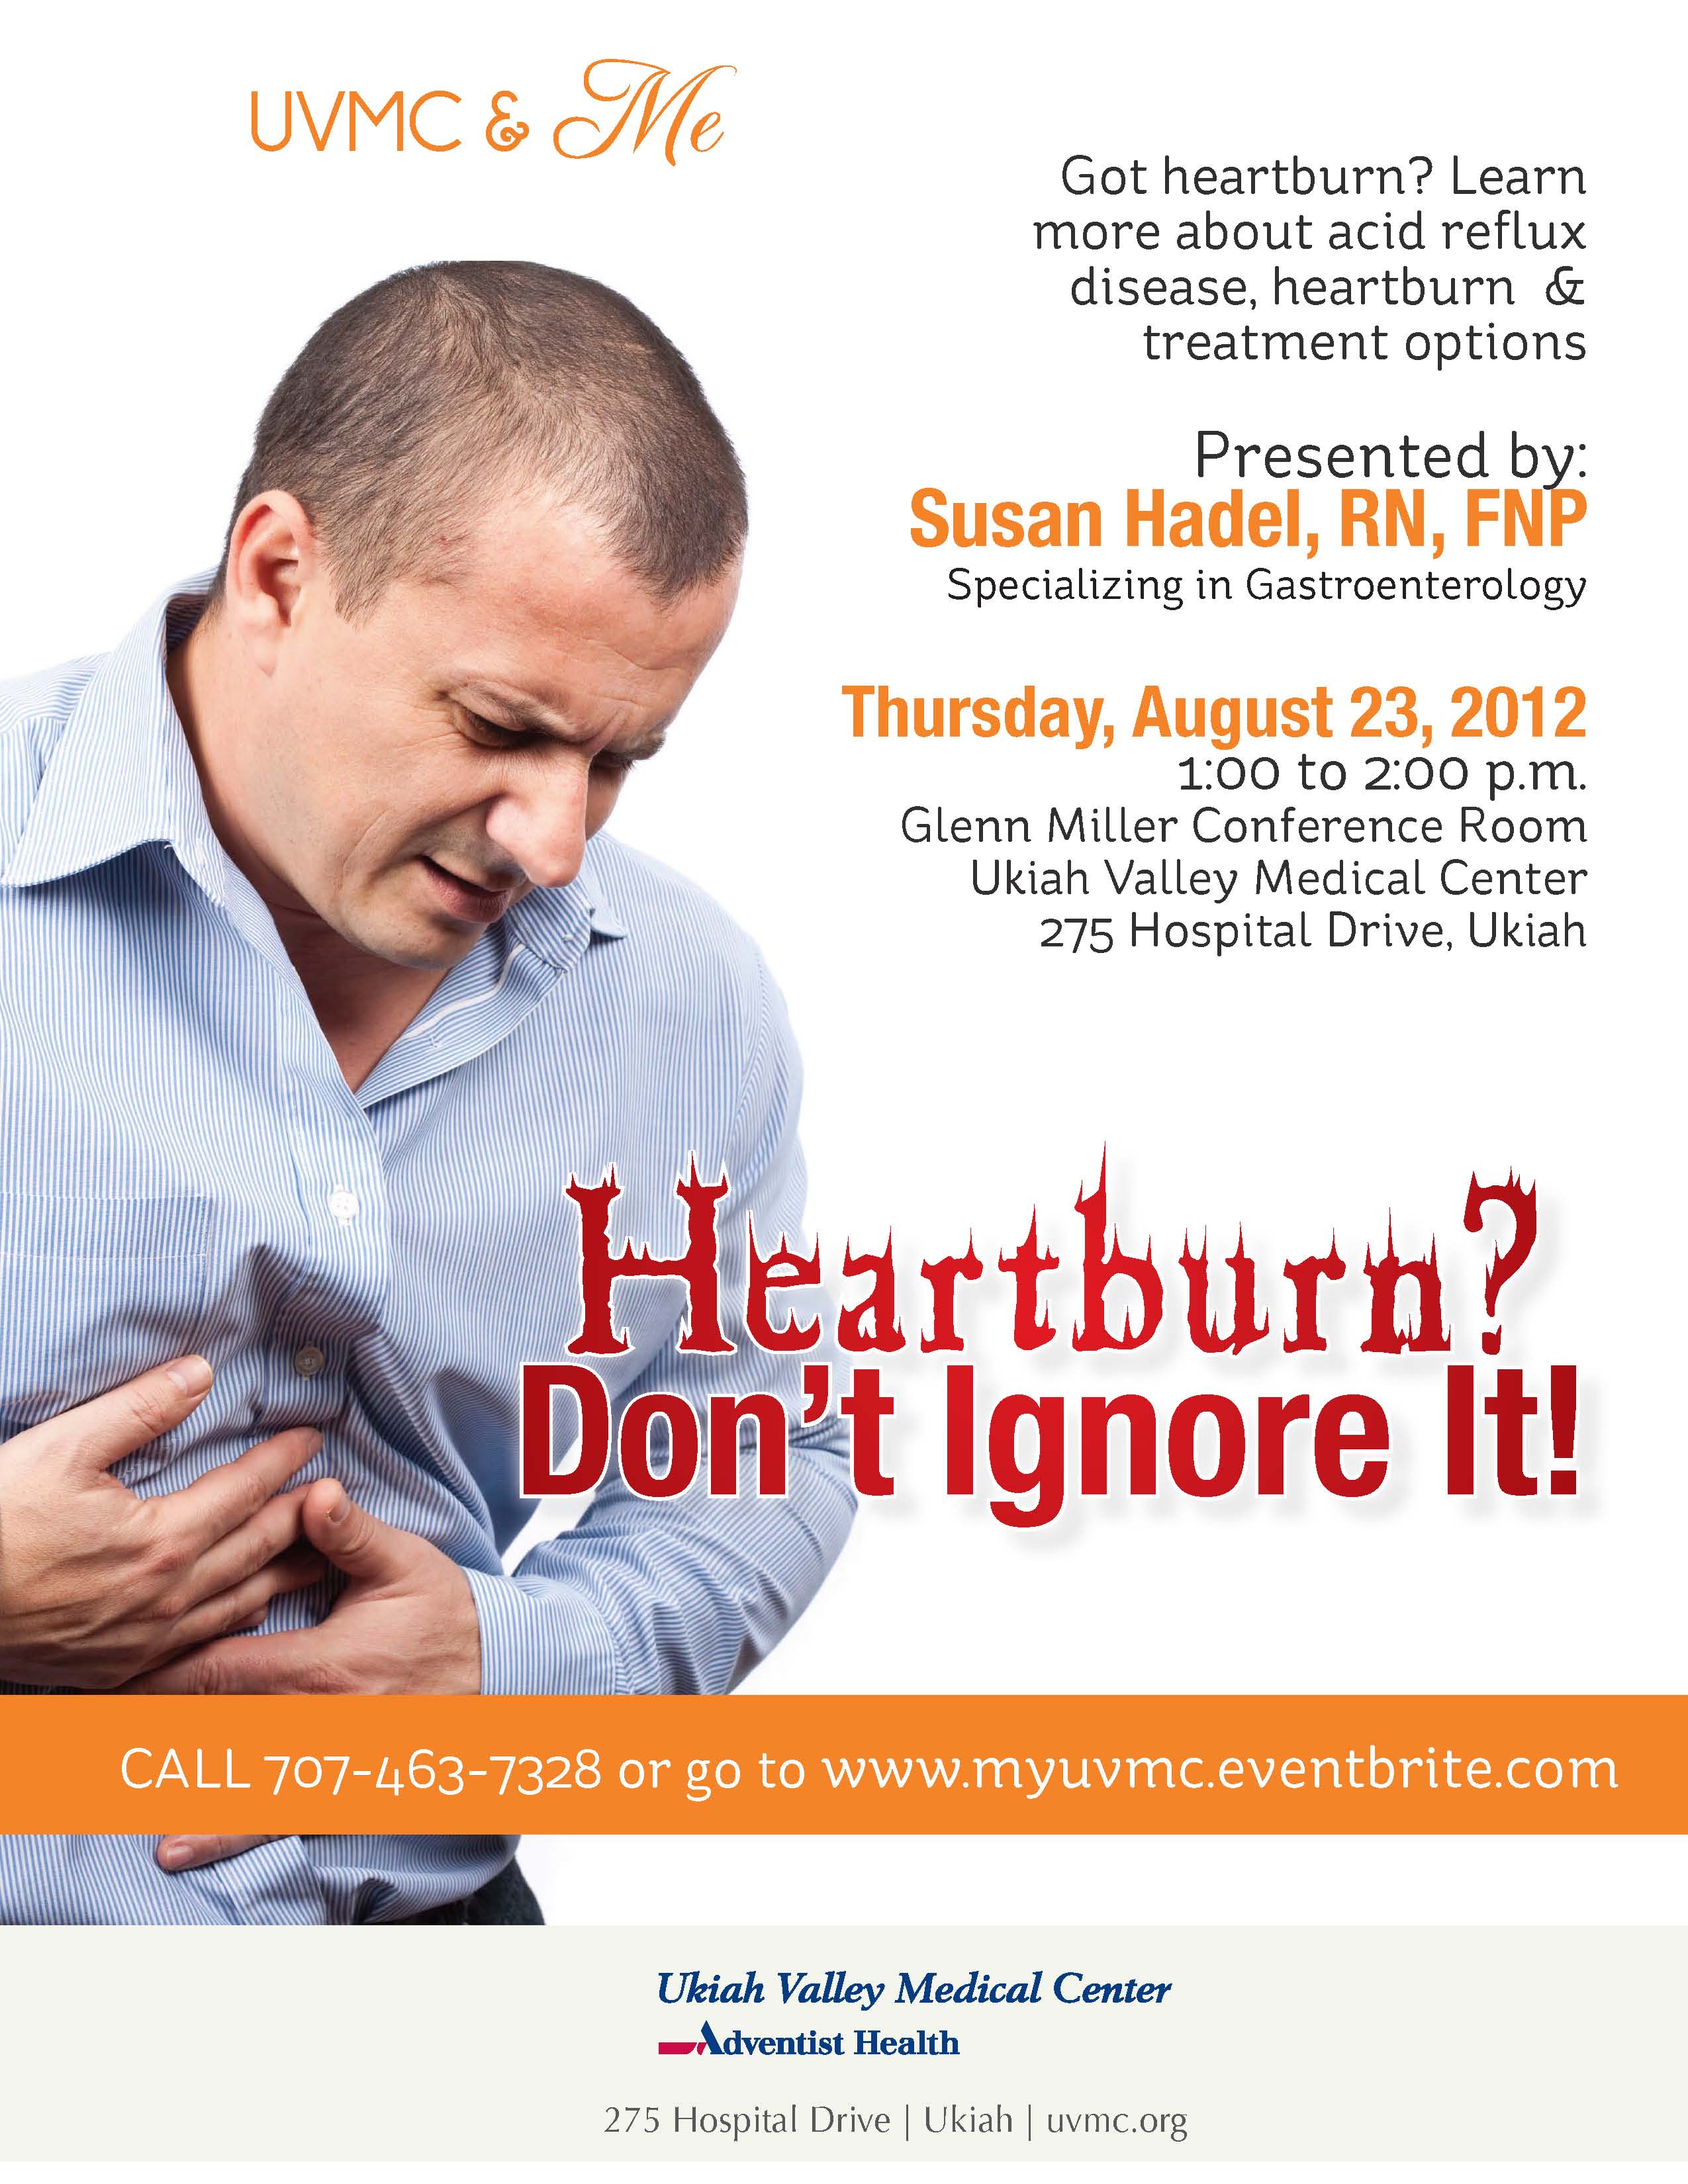 Heartburn Symptoms WebMD: Burning, Pain, Difficulty